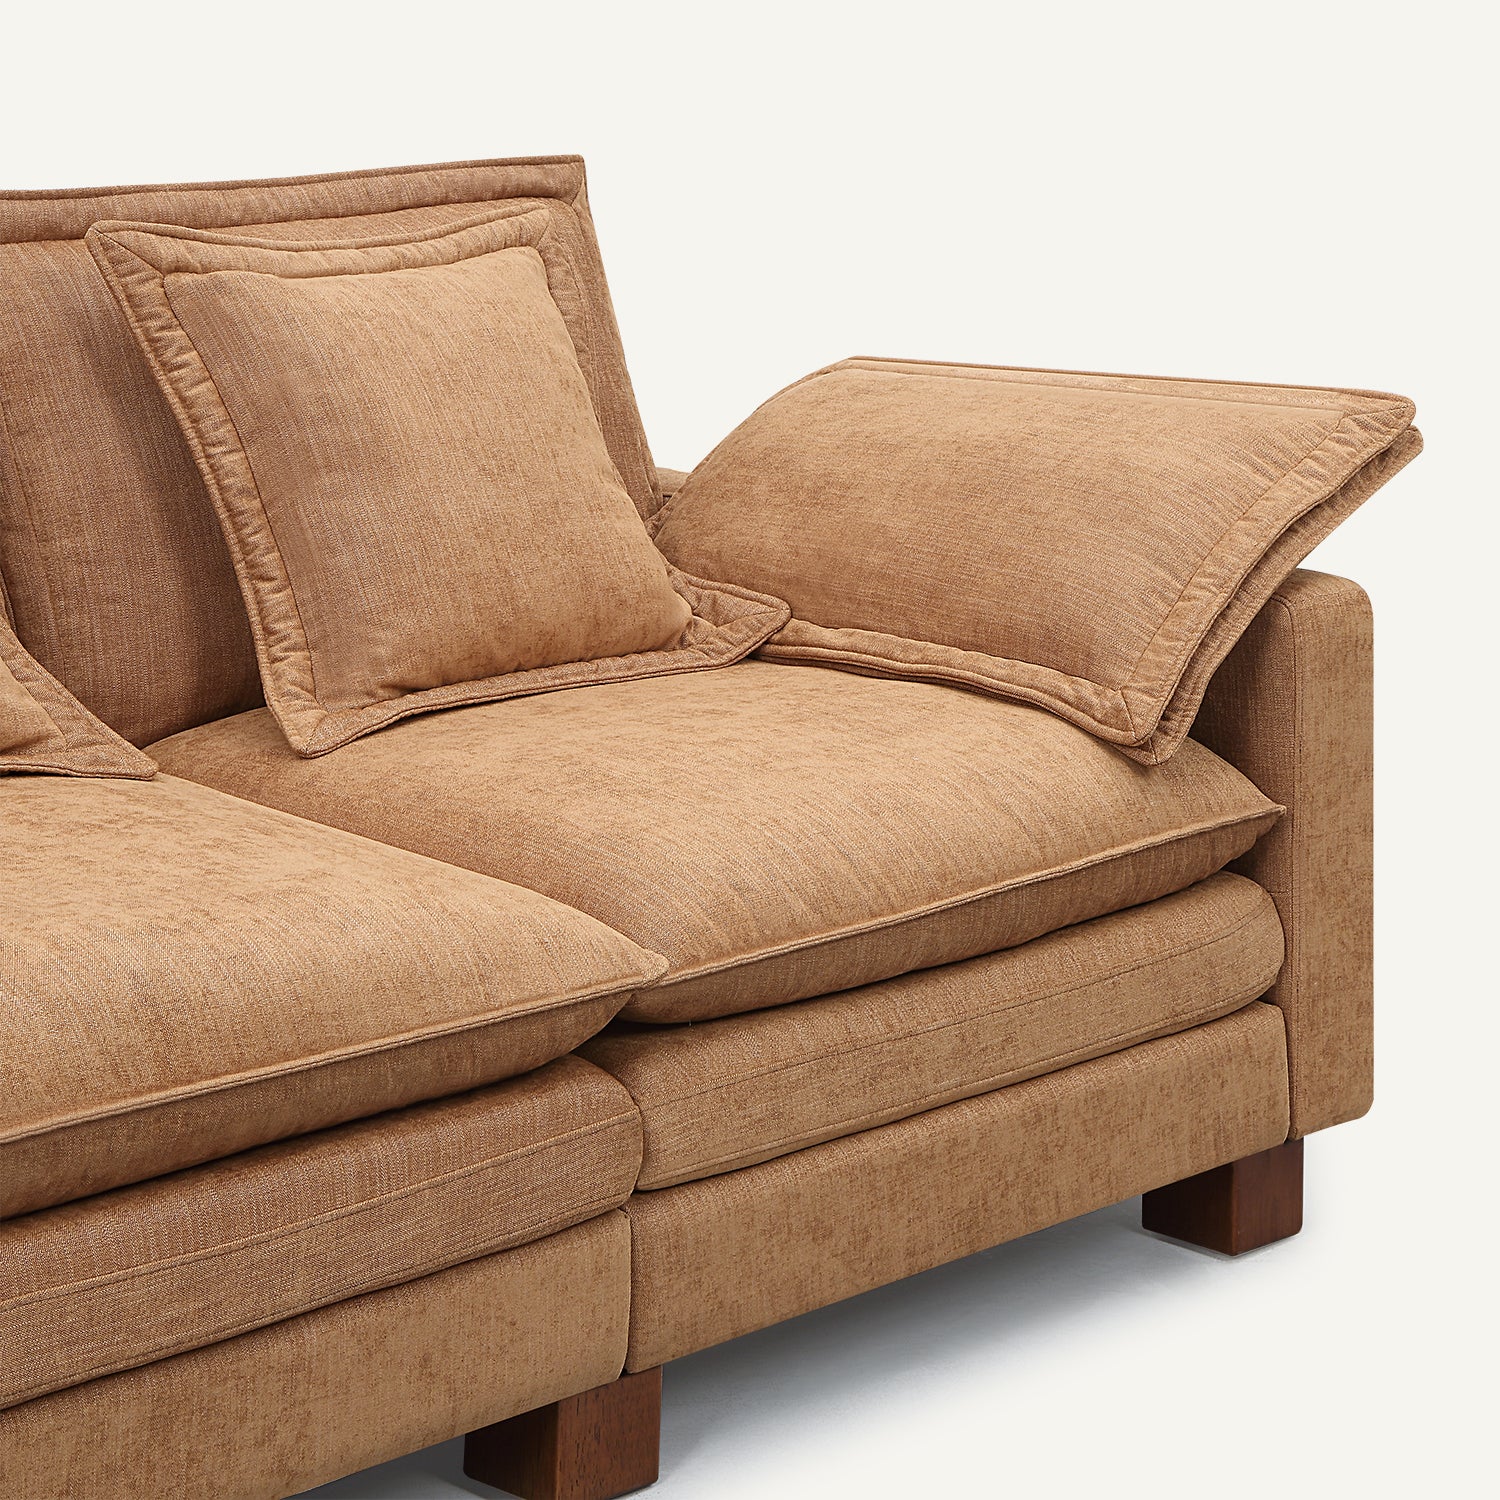 Stacked Tan Linen 4-Seat Sofa